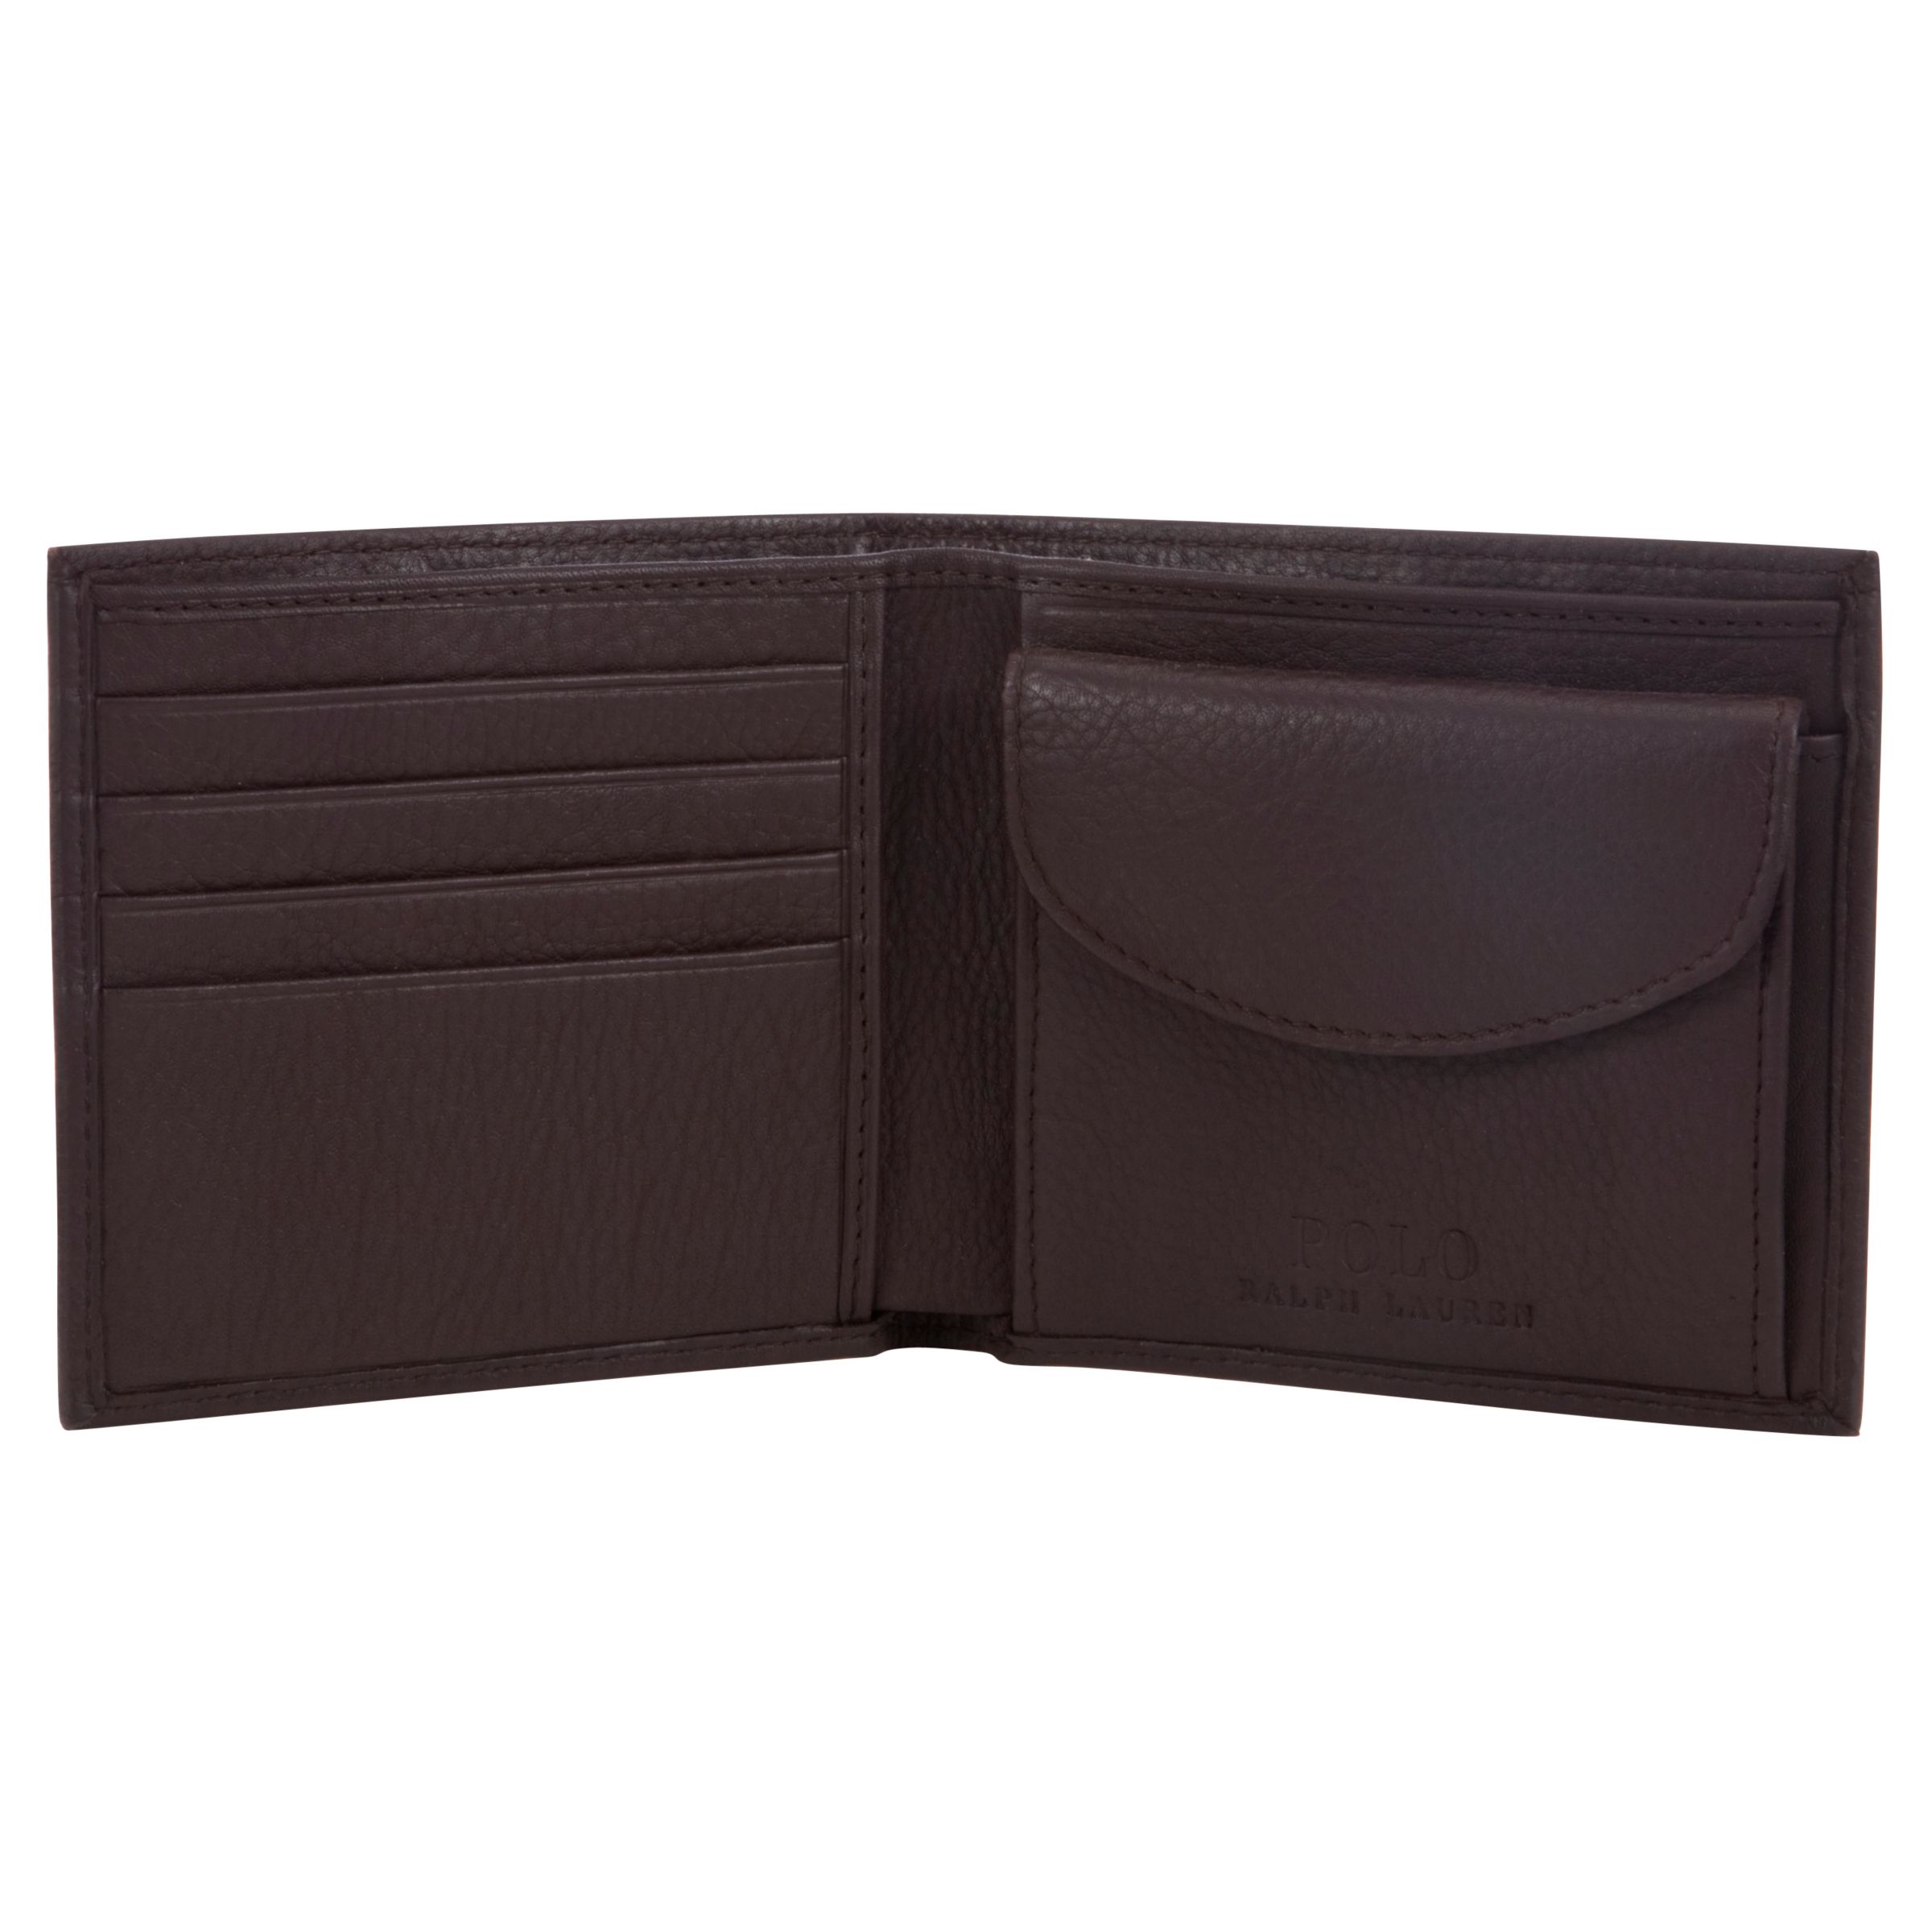 Polo Ralph Lauren Pebble Leather Wallet, Brown